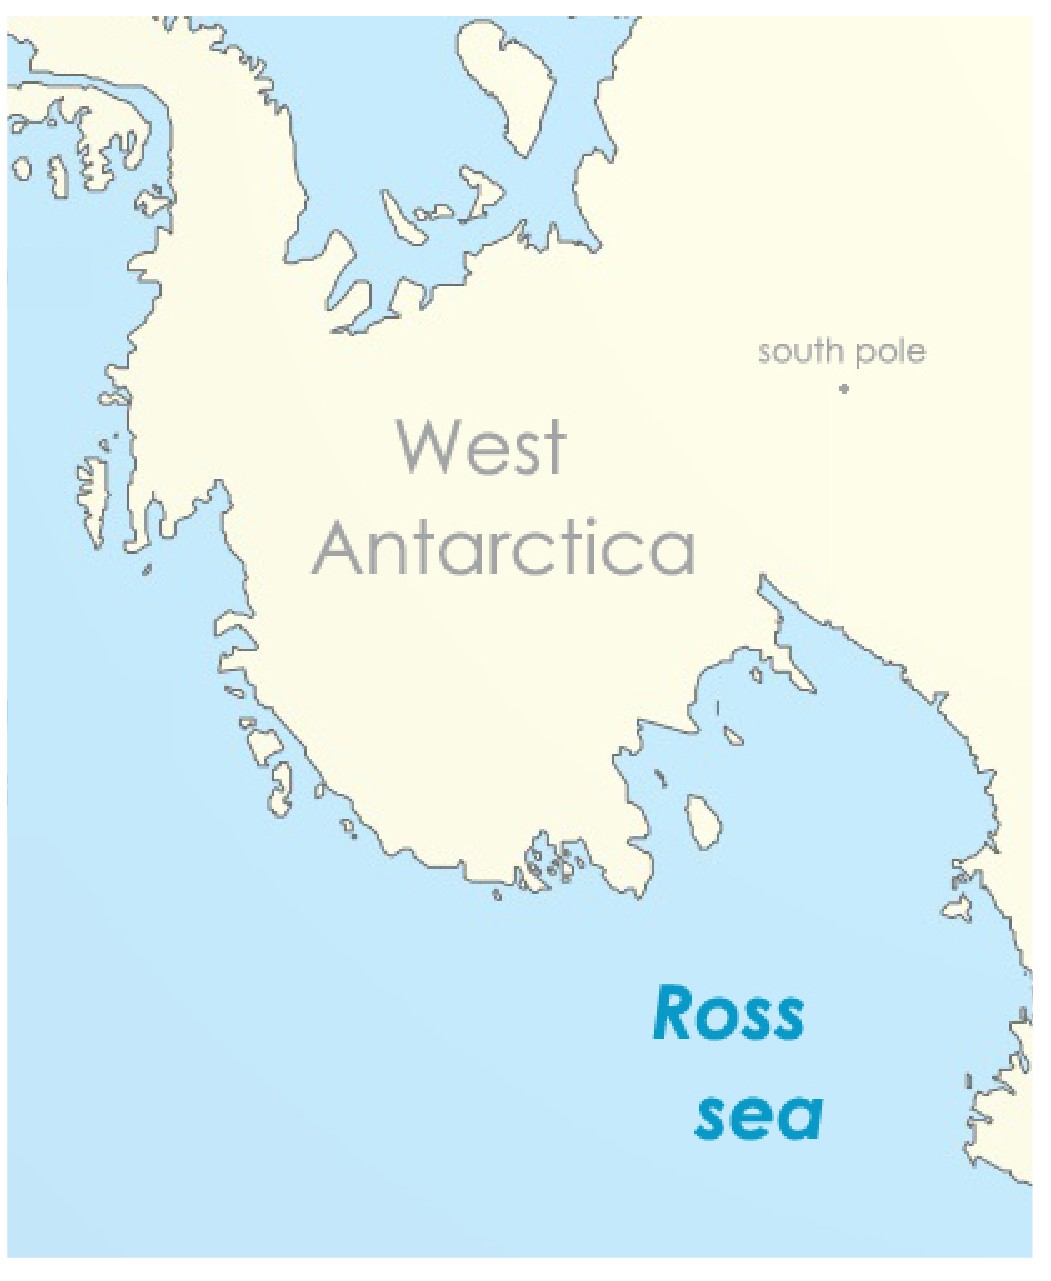 Ross sea.jpg